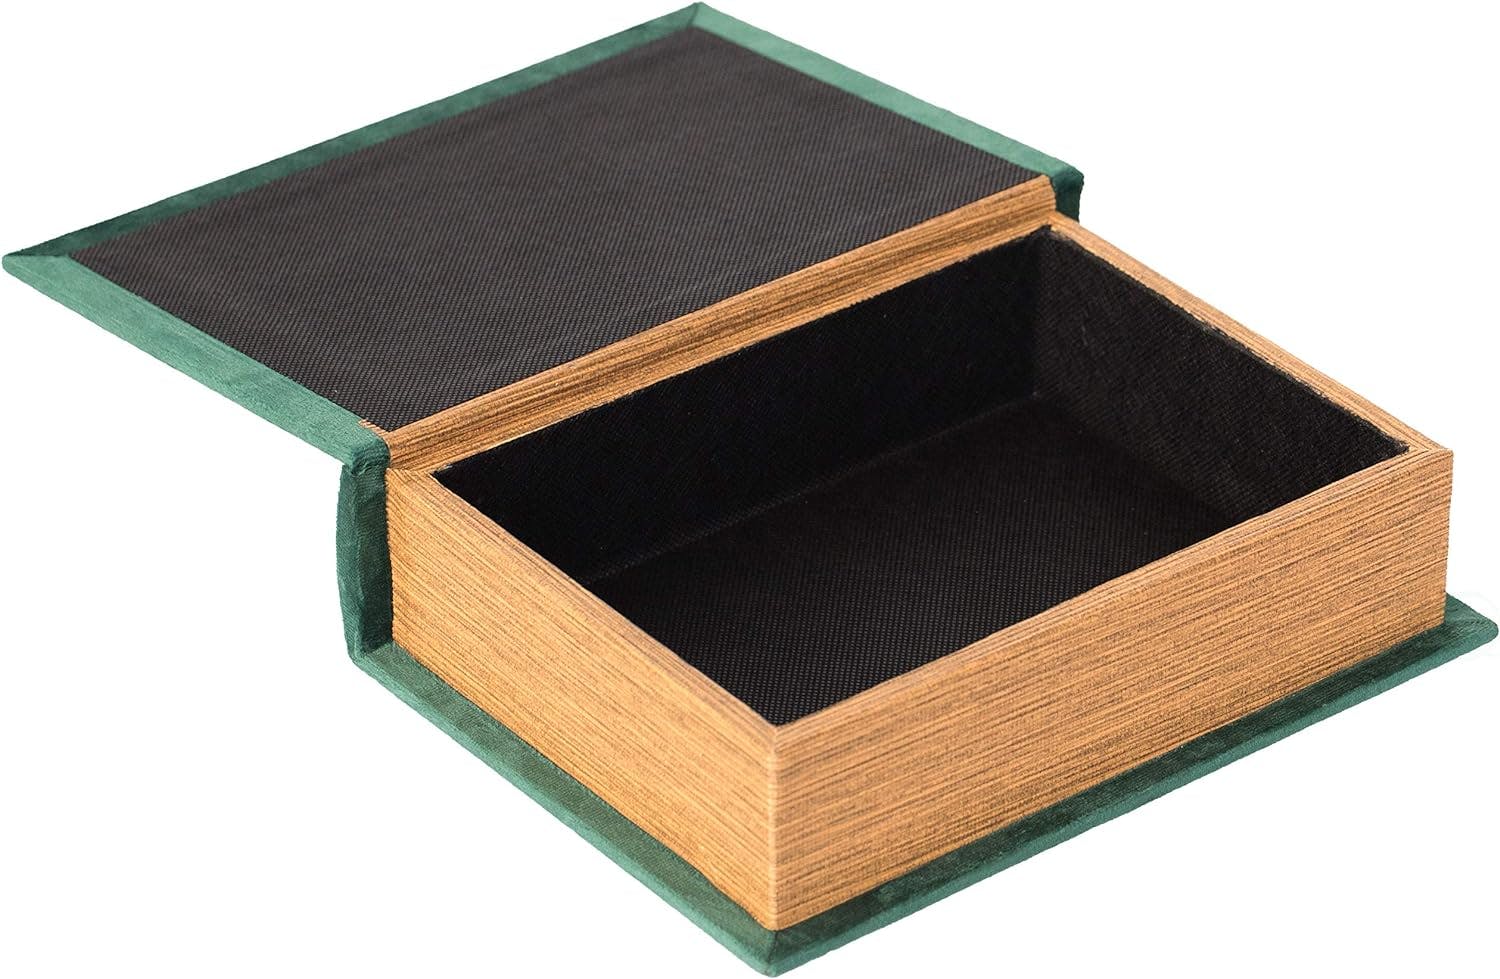 Vintage Green Velvet Book-Inspired Trinket Storage Box